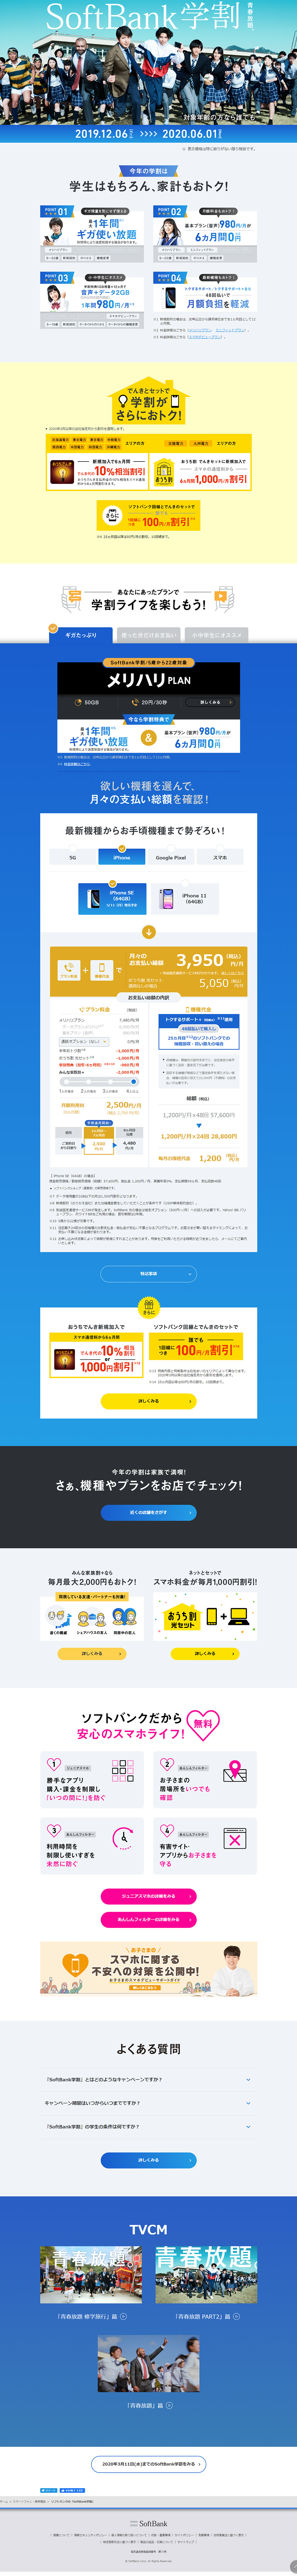 SoftBank学割_pc_1